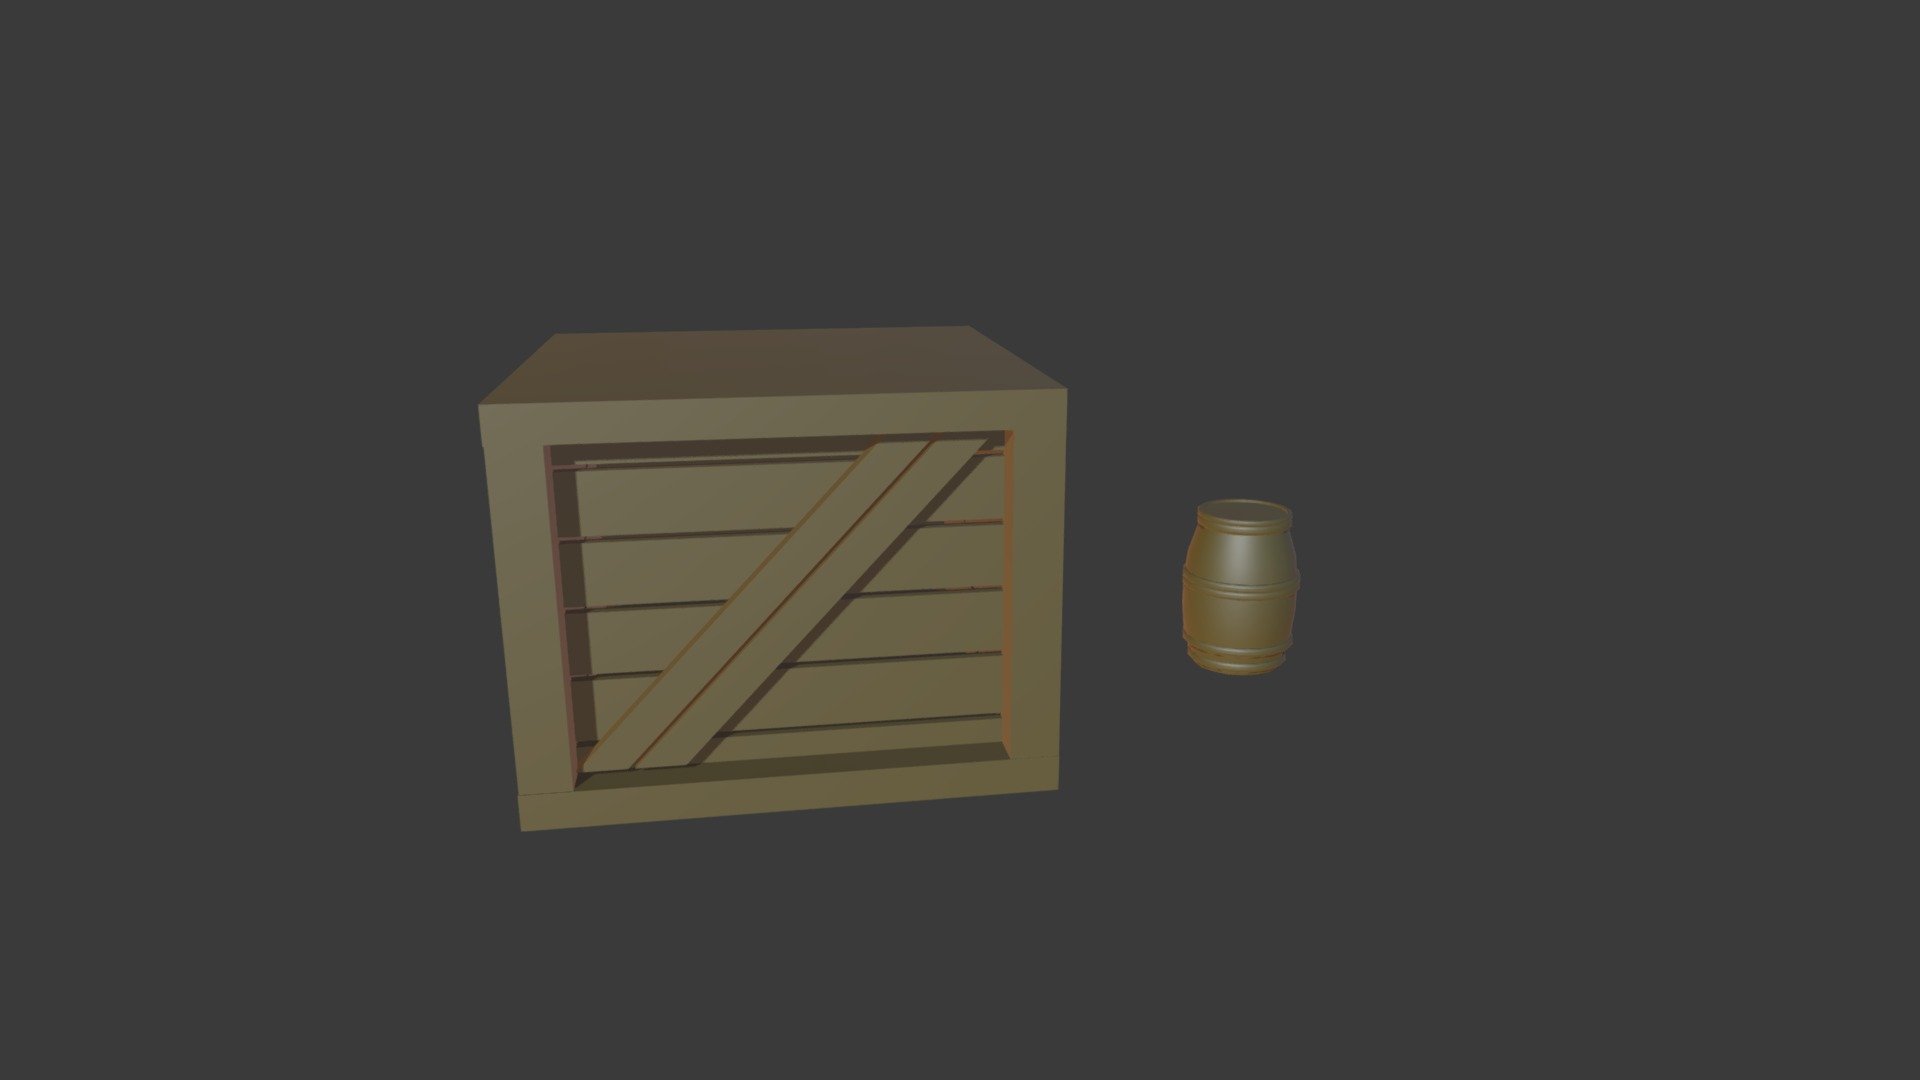 Barrel And Crate